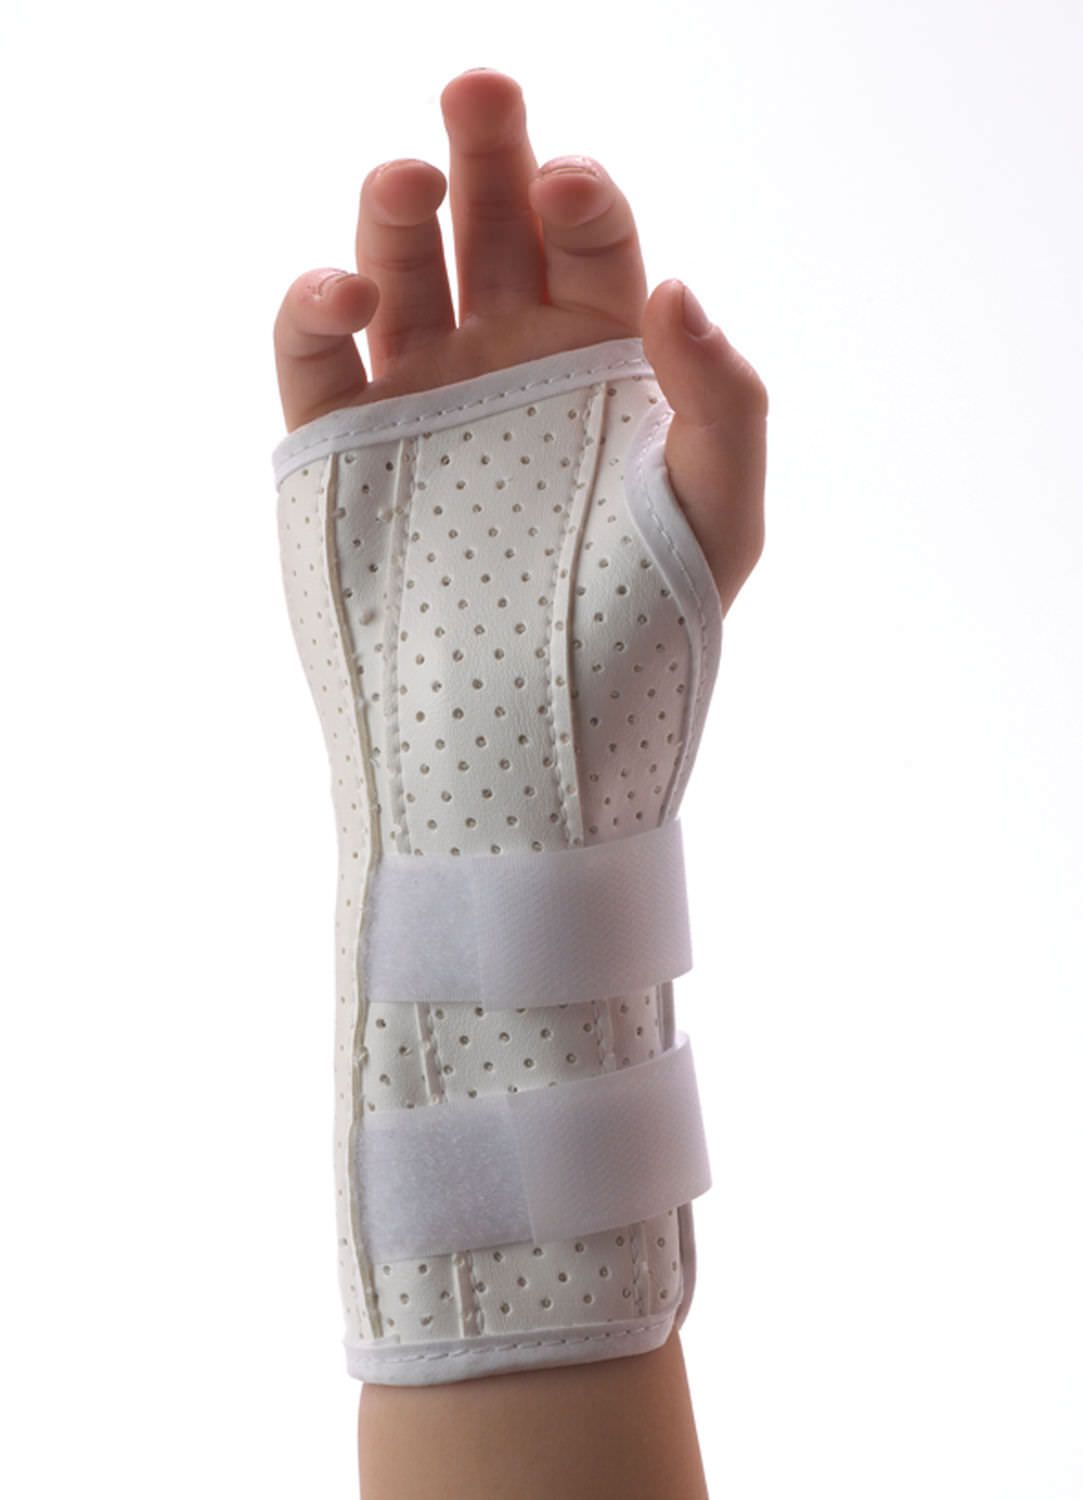 Wrist orthosis (orthopedic immobilization) / pediatric 73-554X, 41-151X Corflex